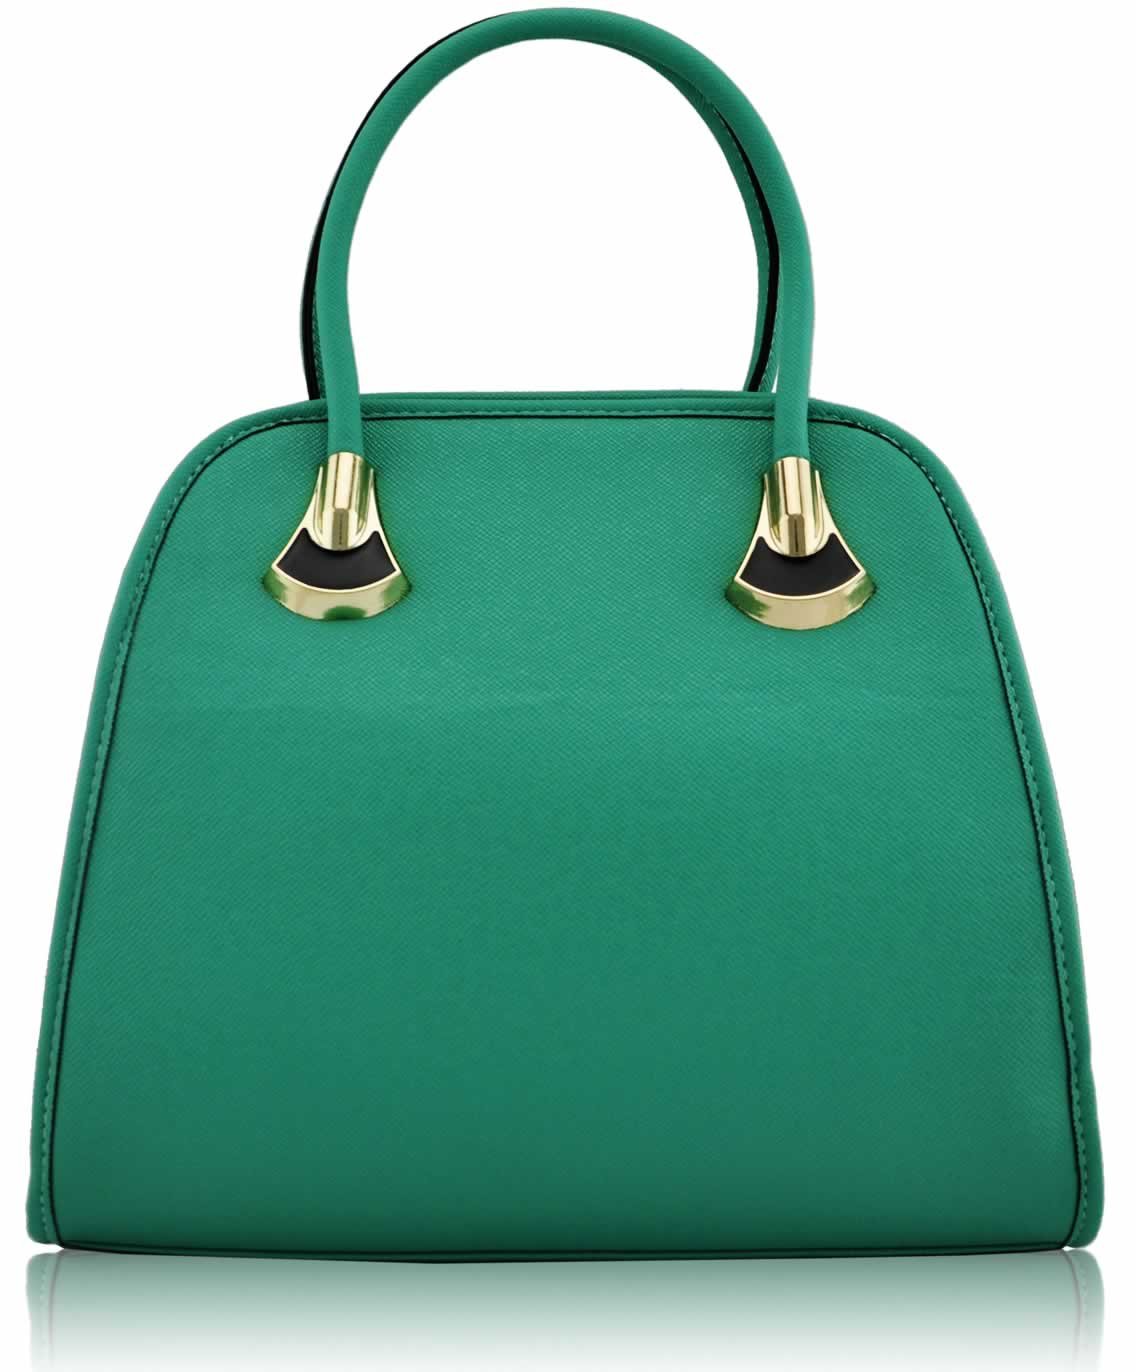 Wholesale bag - Emerald Fashion Grab Tote bag